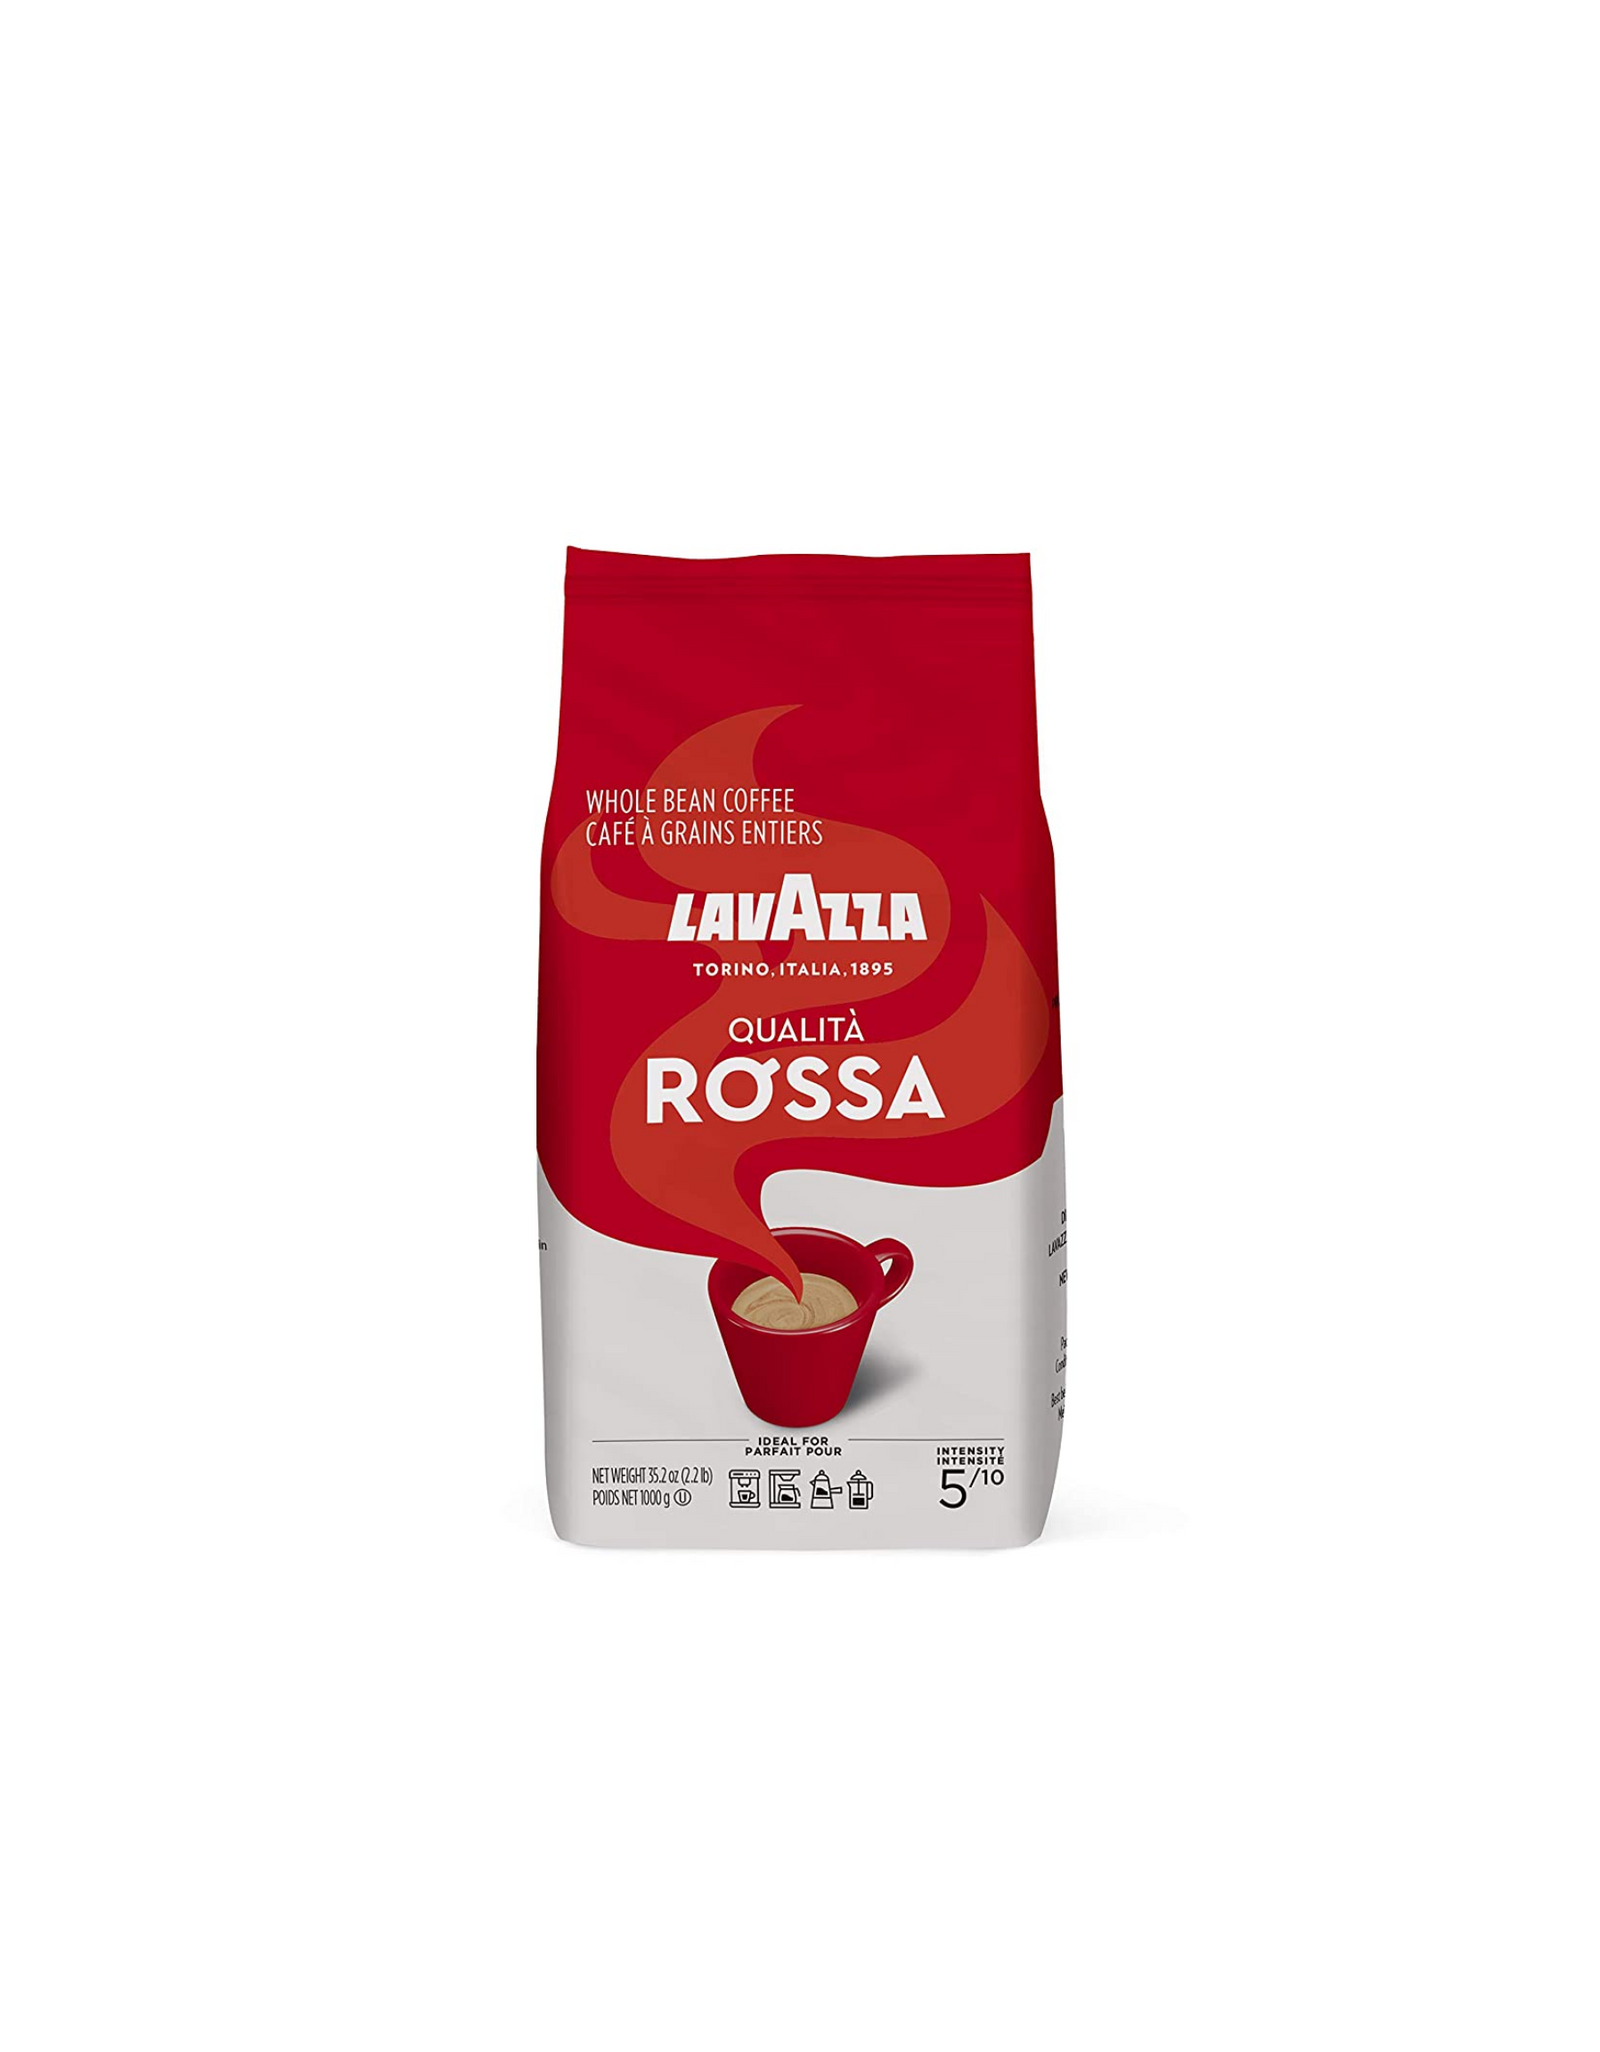 Lavazza Qualita Rossa, Italian Coffee Beans Expresso, 2.2 lb. bag